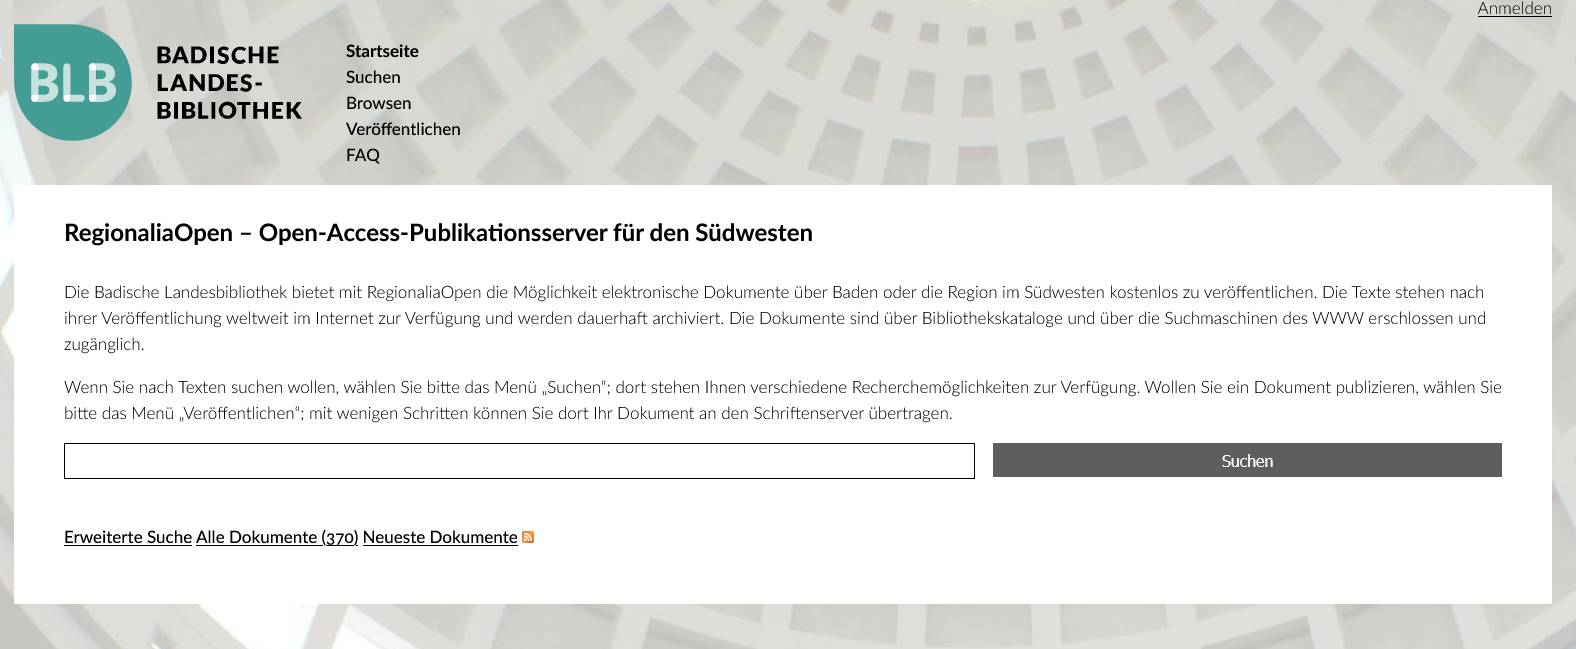 Bildschirmfoto: Suchfeld des Open-Access-Publikationsserver